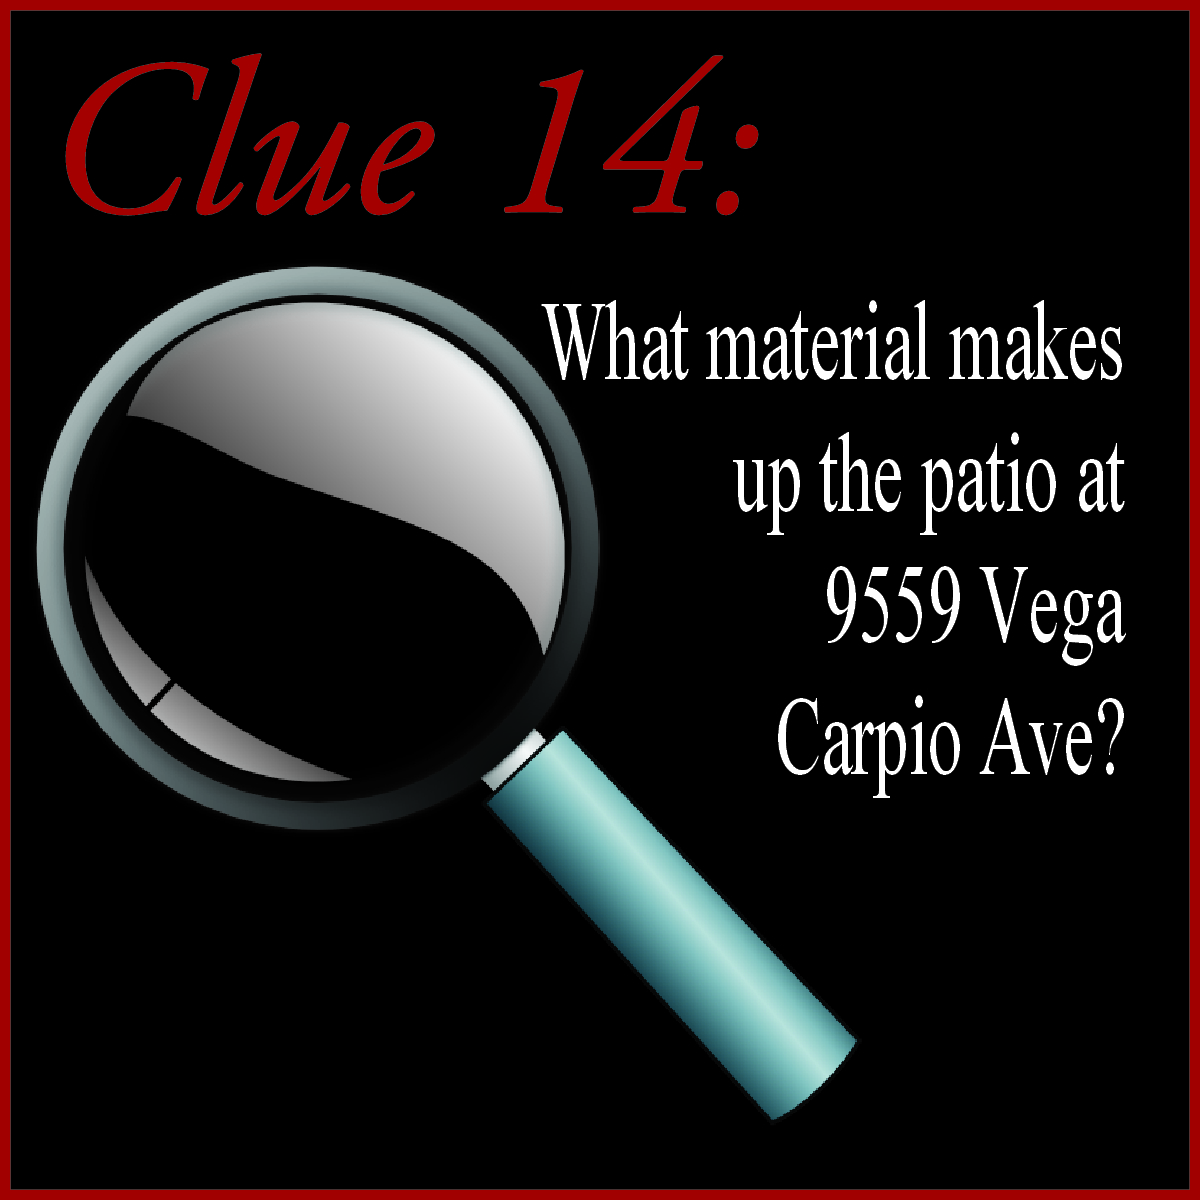 Las Vegas Virtual Tour Clue 14